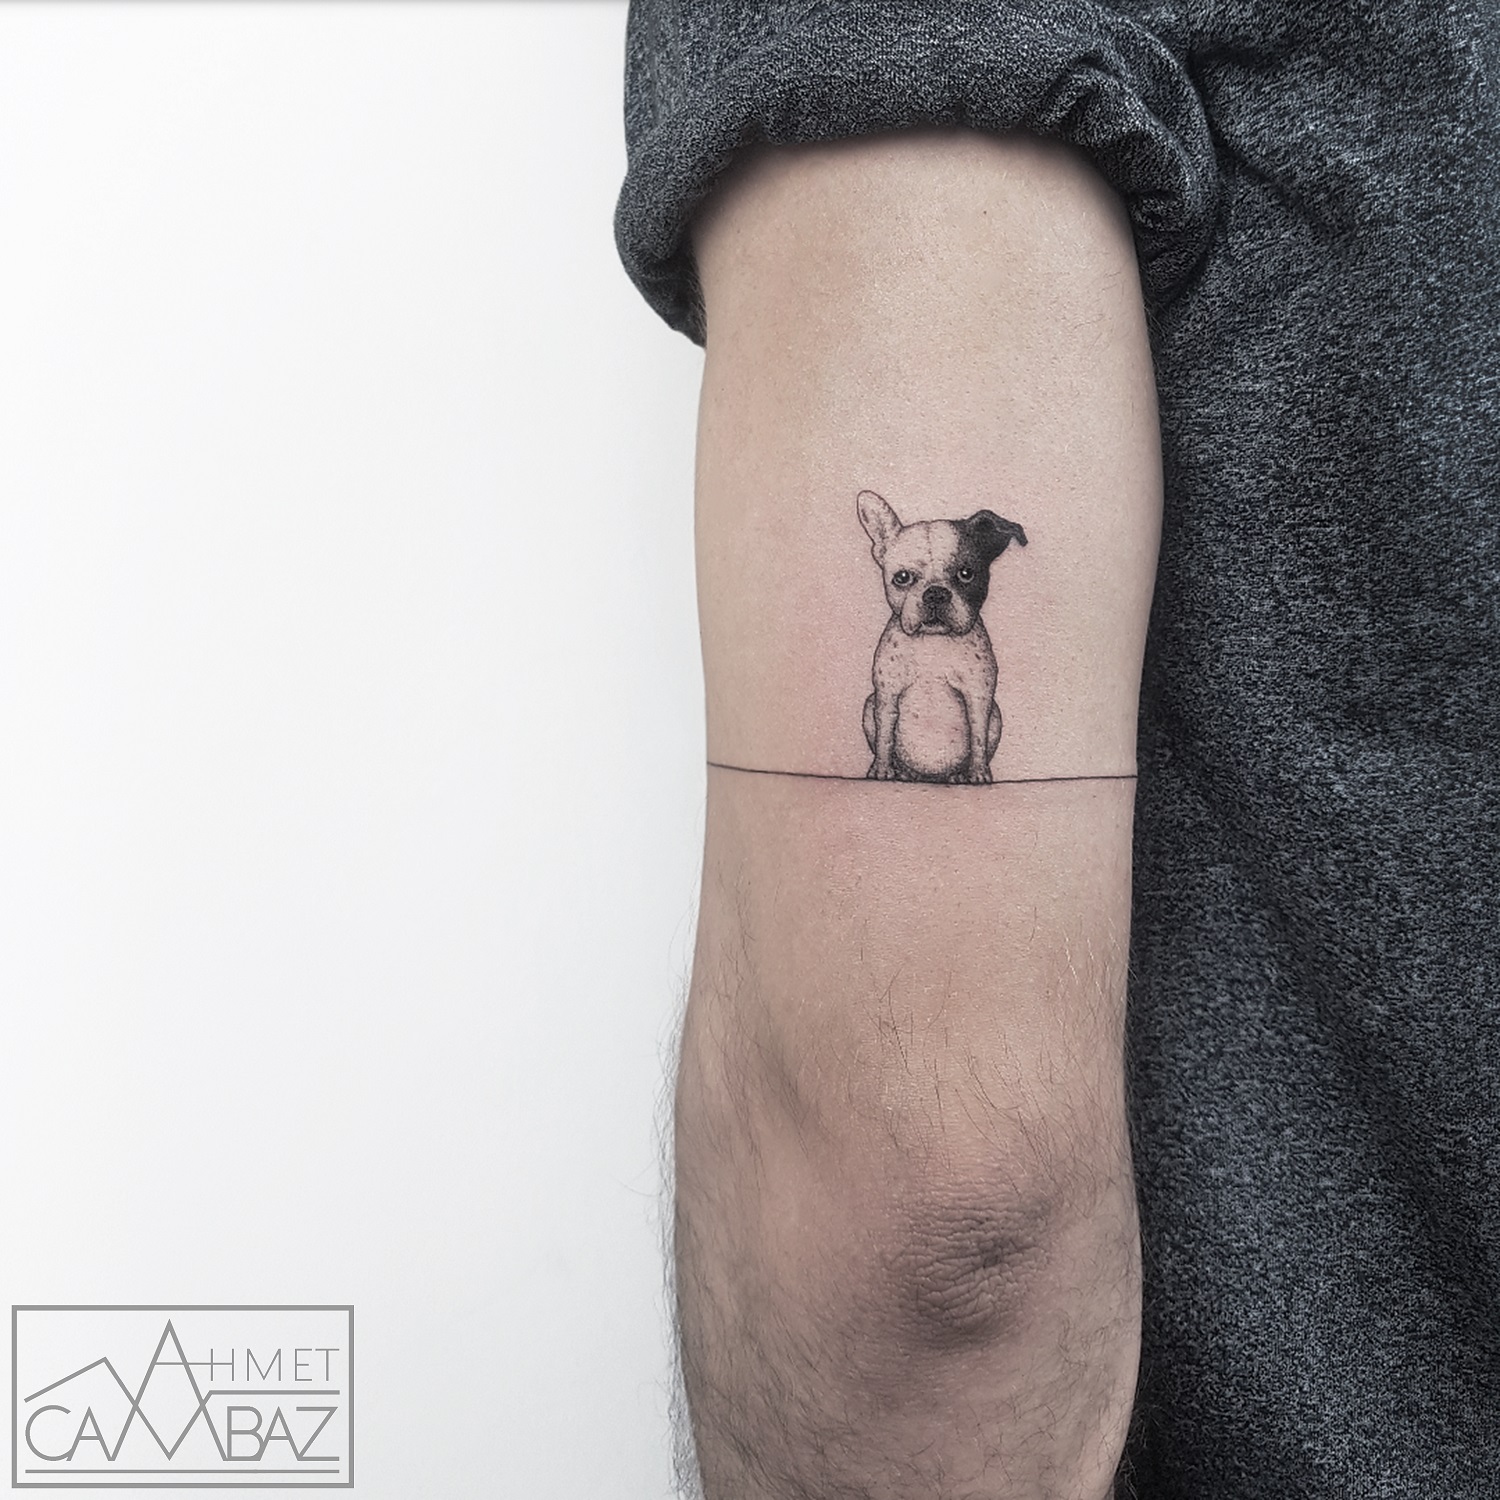 Single needle French bulldog tattoo on the inner arm